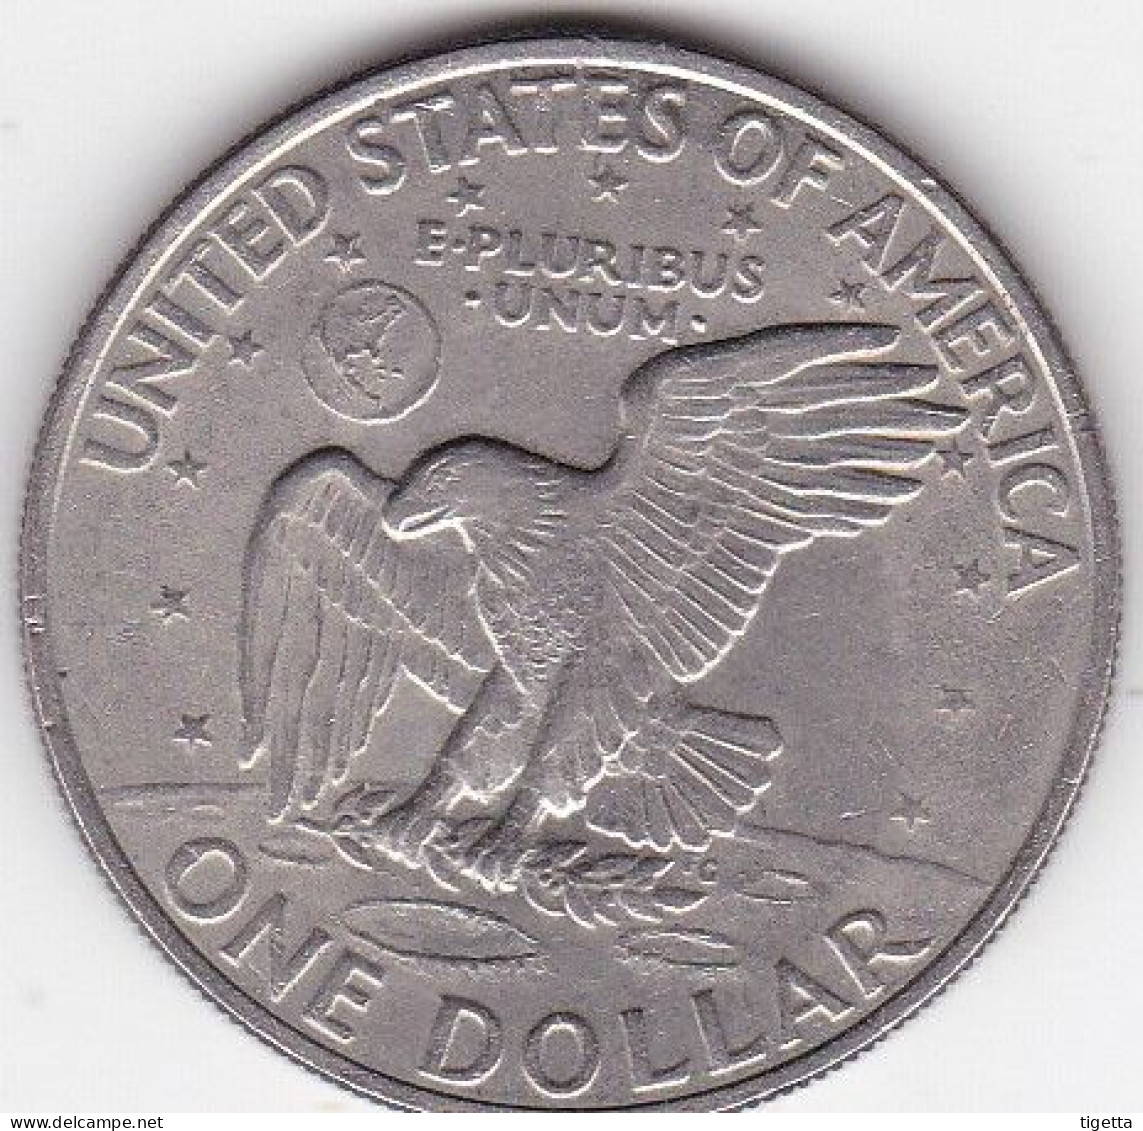 STATI UNITI-USA  1 $ EISENHOWER ANNO 1971 - 1971-1978: Eisenhower